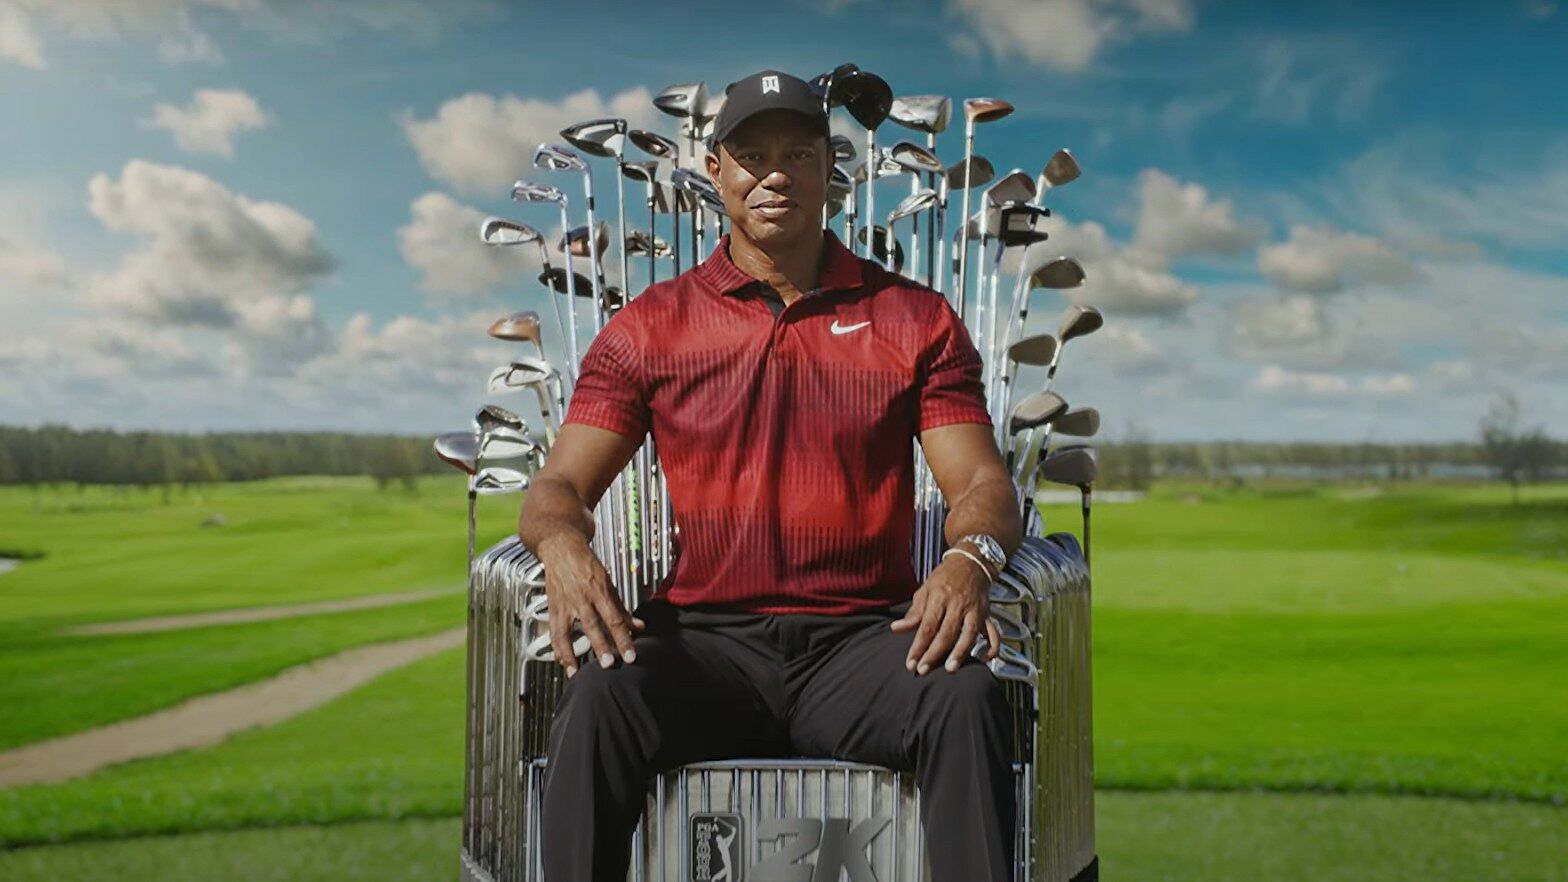 The Lord of the Rings: The Return of the King dibuat dengan Tiger Woods